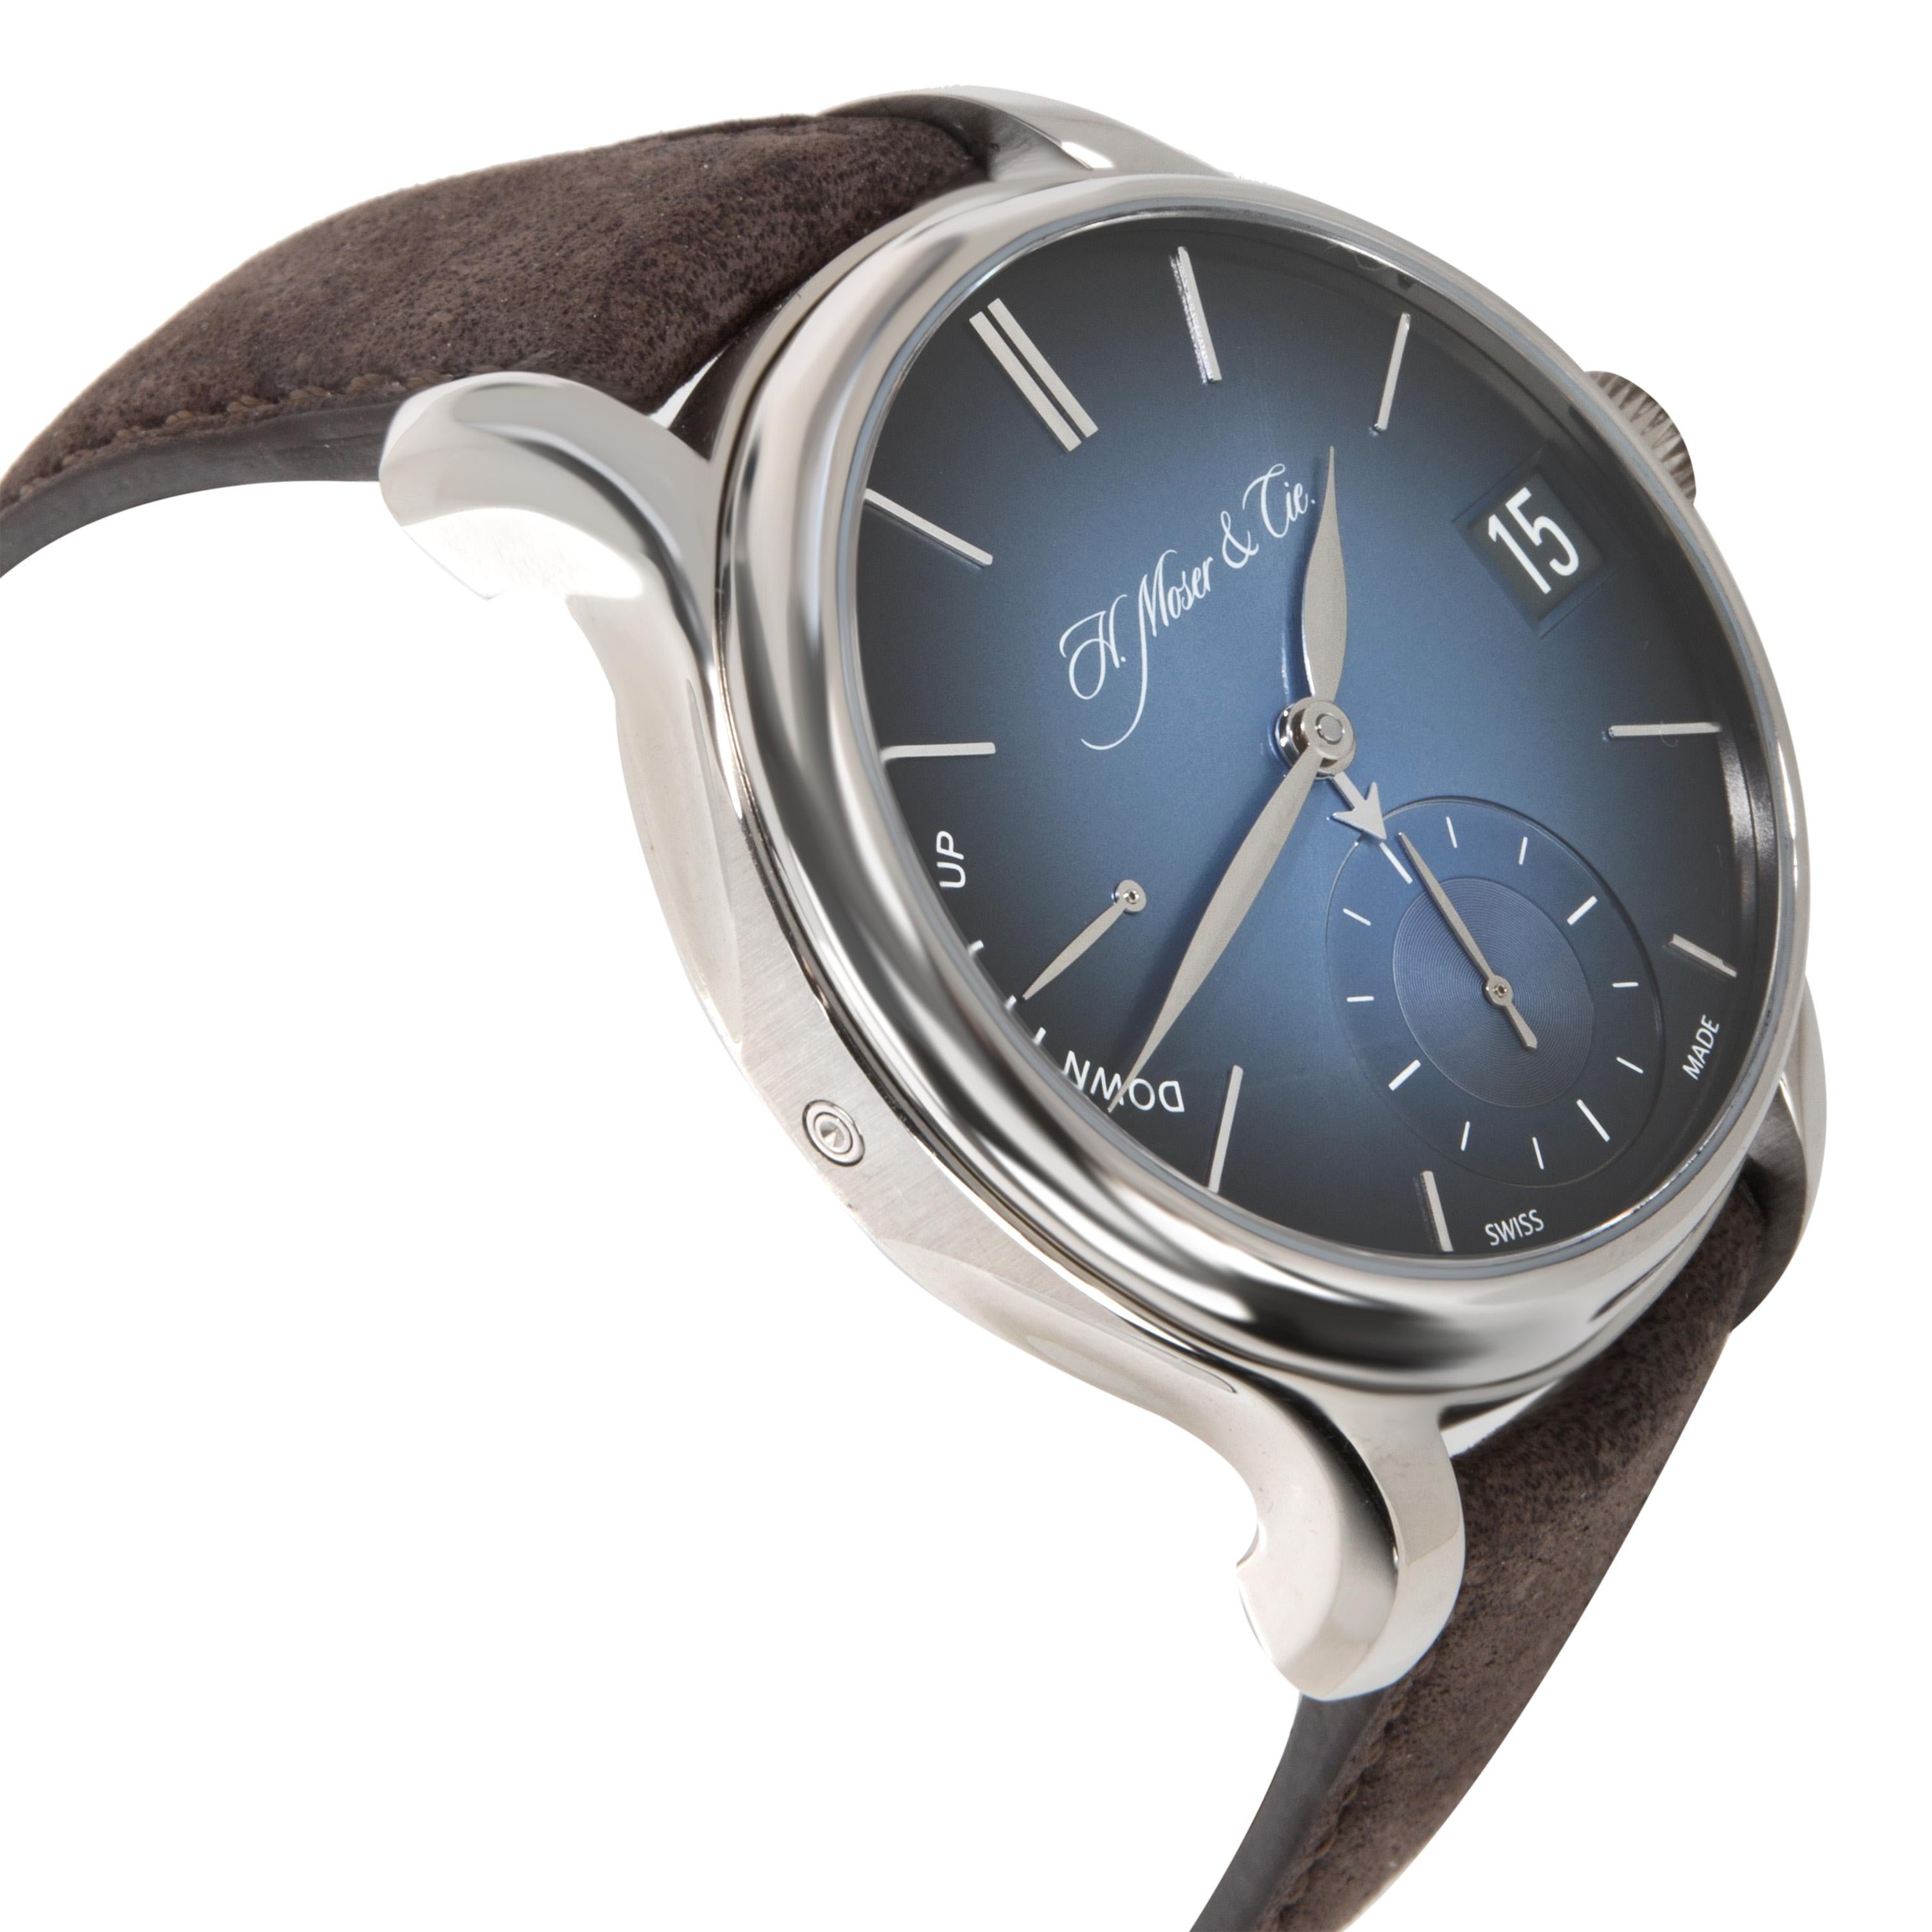 H. Moser & Cie. Endeavour Perpetual 1341-0207 Men's Watch in 18 Karat White Gold 1